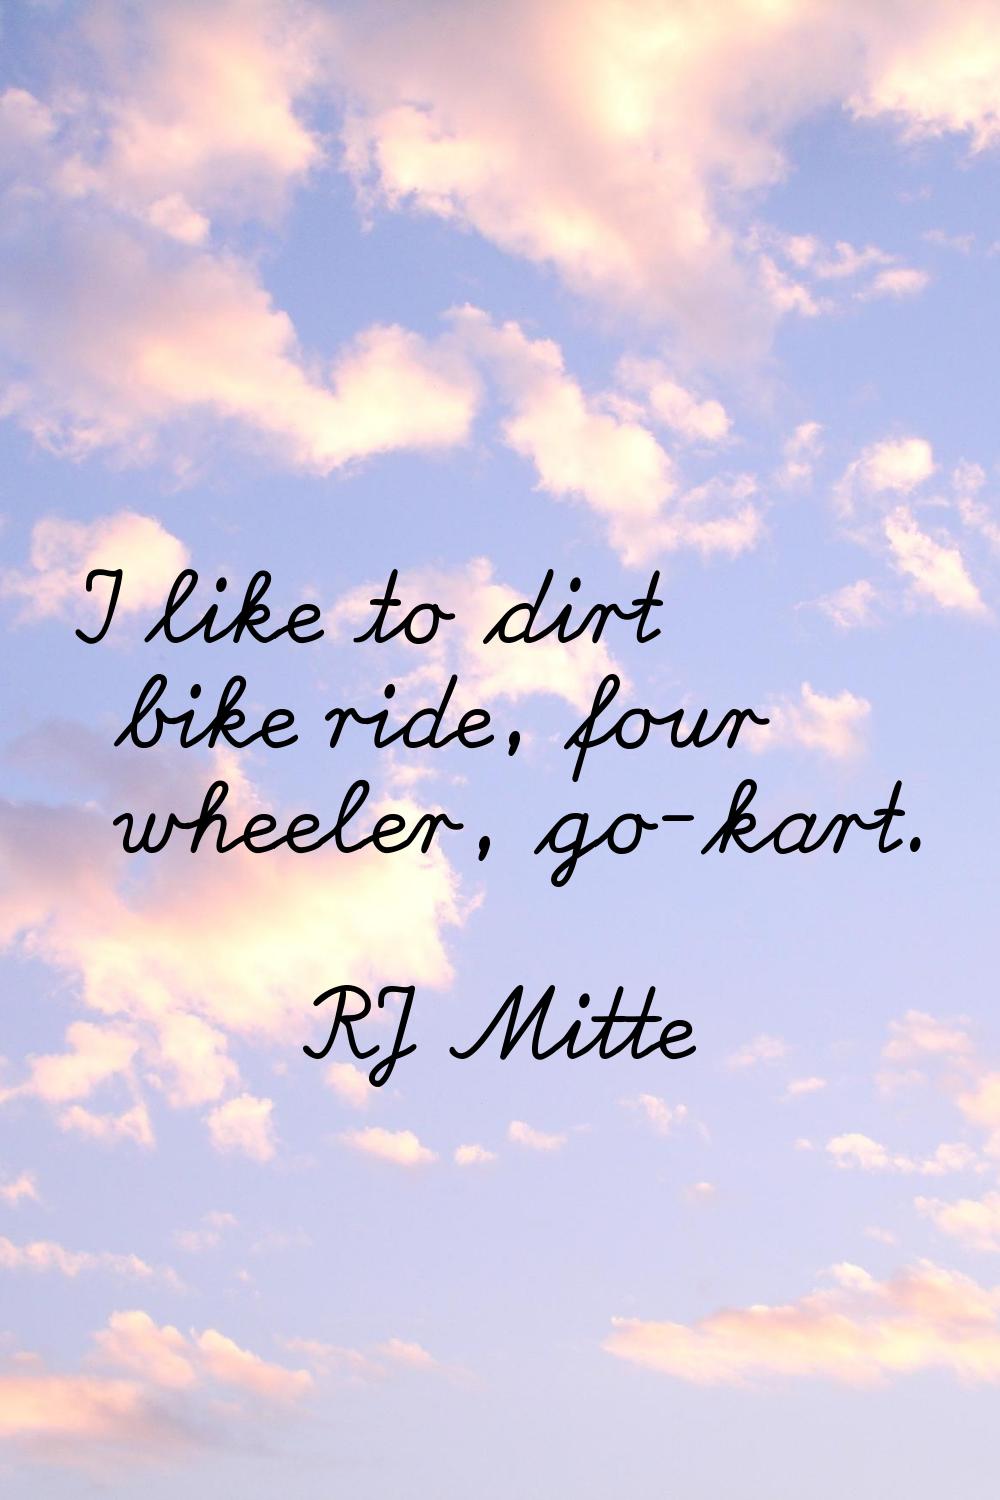 I like to dirt bike ride, four wheeler, go-kart.